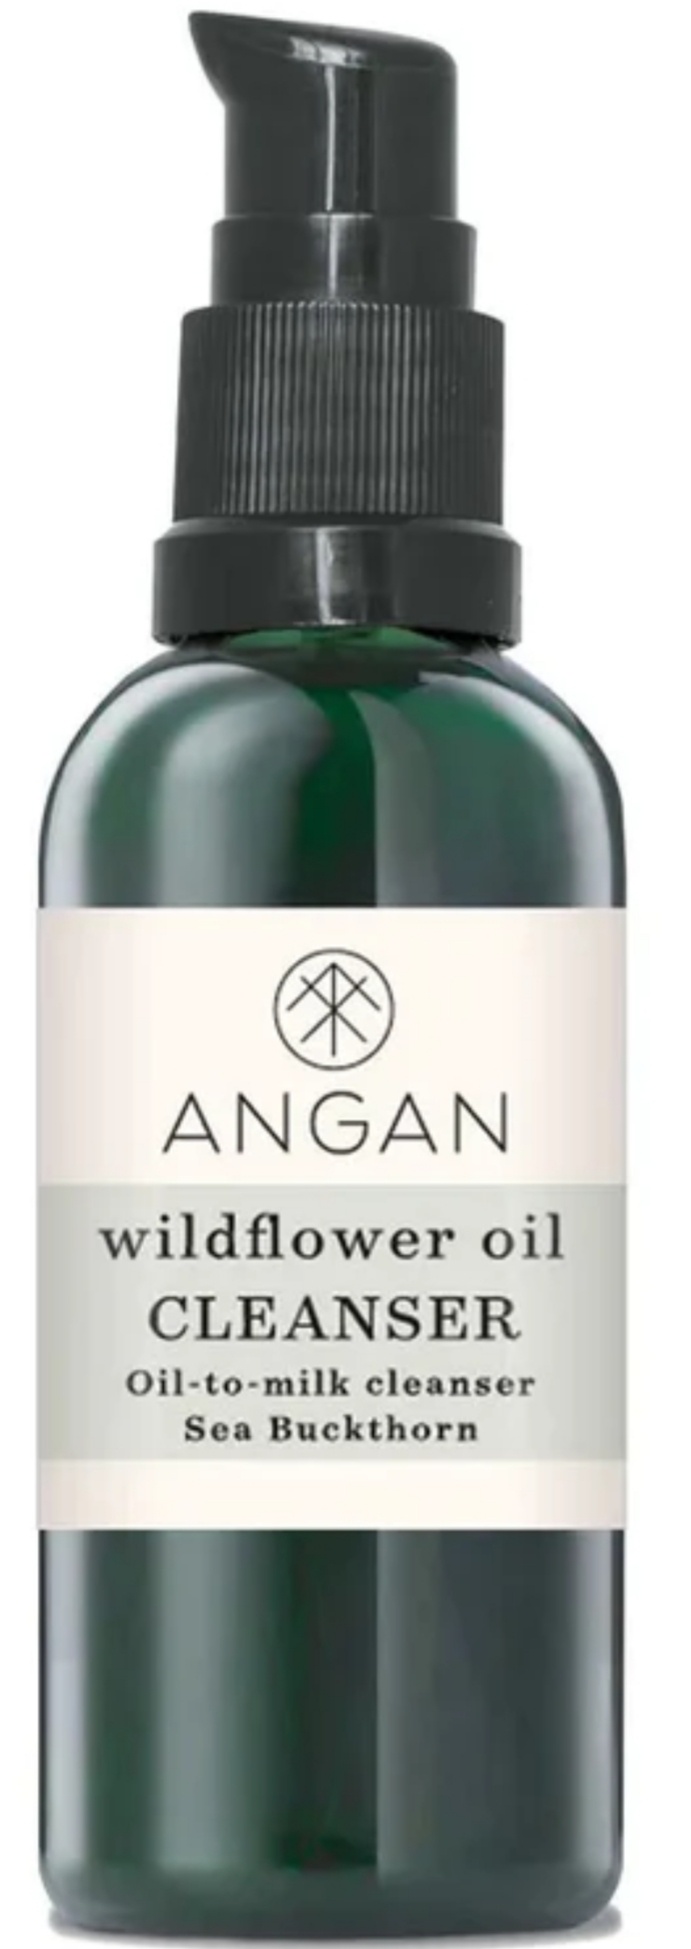 Angan Wildflower Oil Cleanser